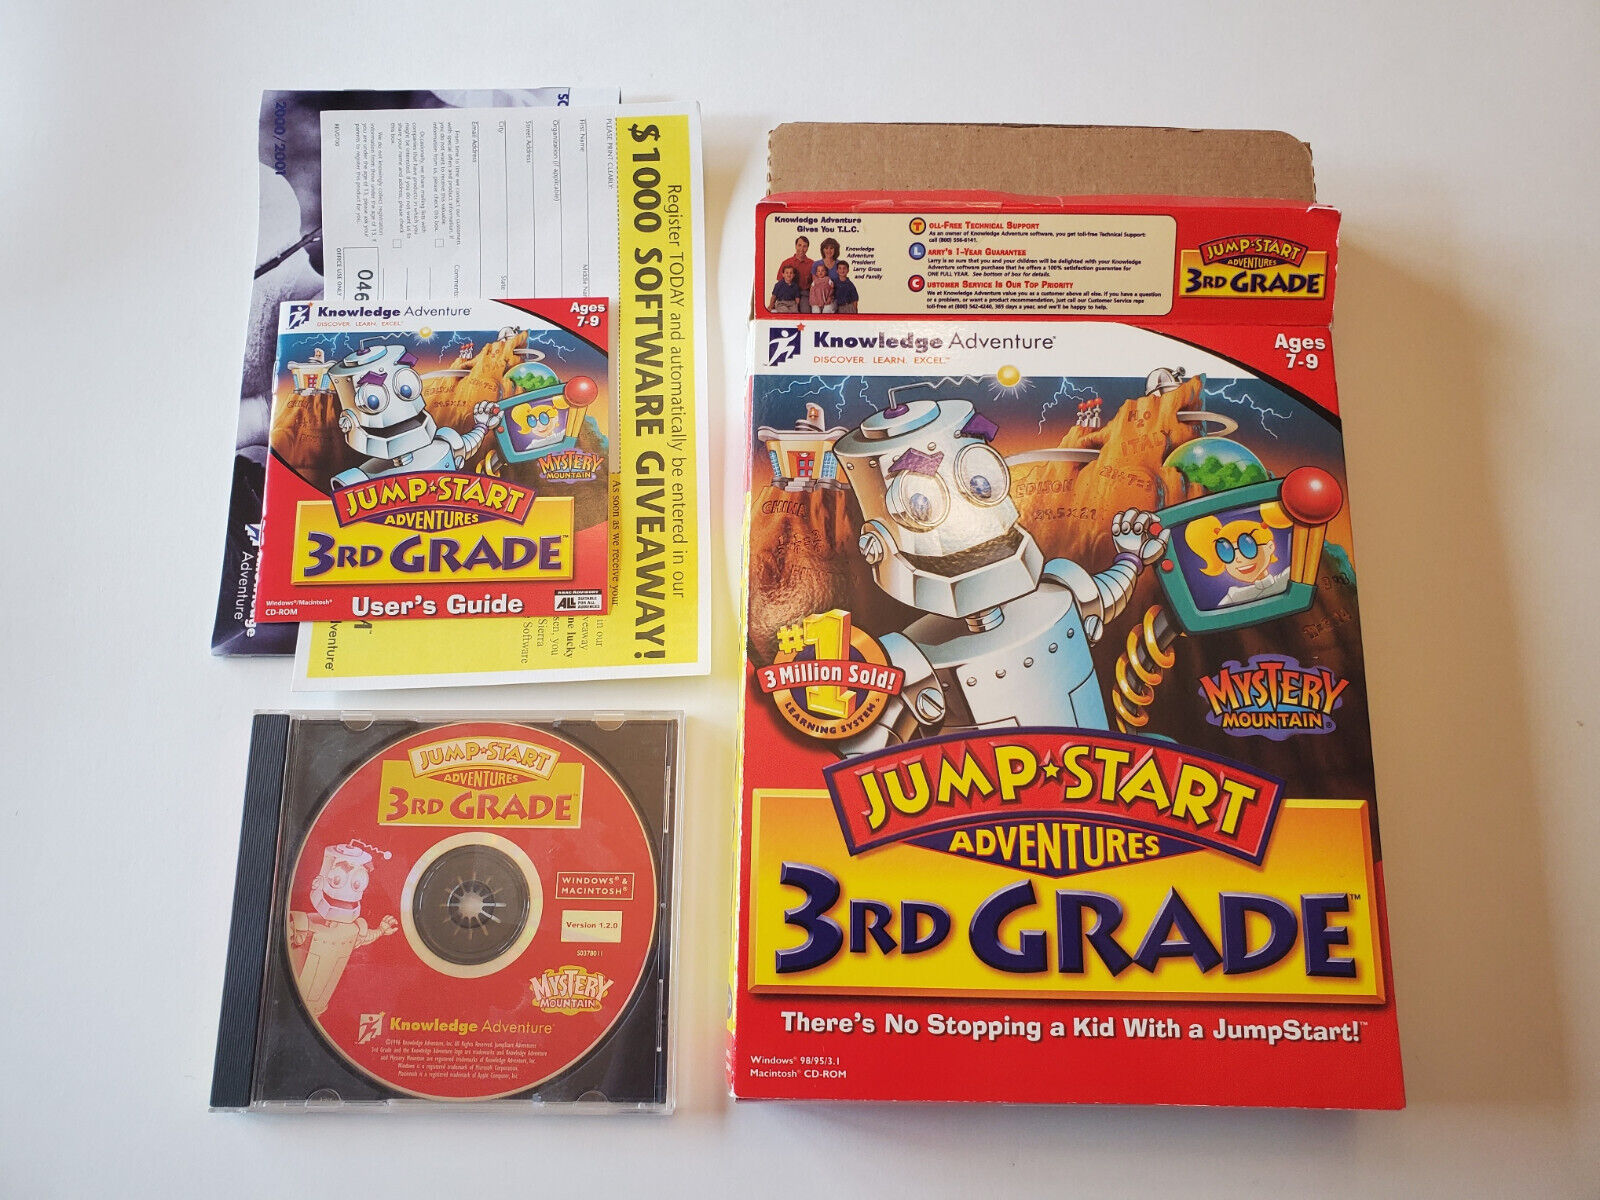 JumpStart Adventures 3rd Grade PC/MAC CD-ROM BIG BOX CIB - Mystery Mountain